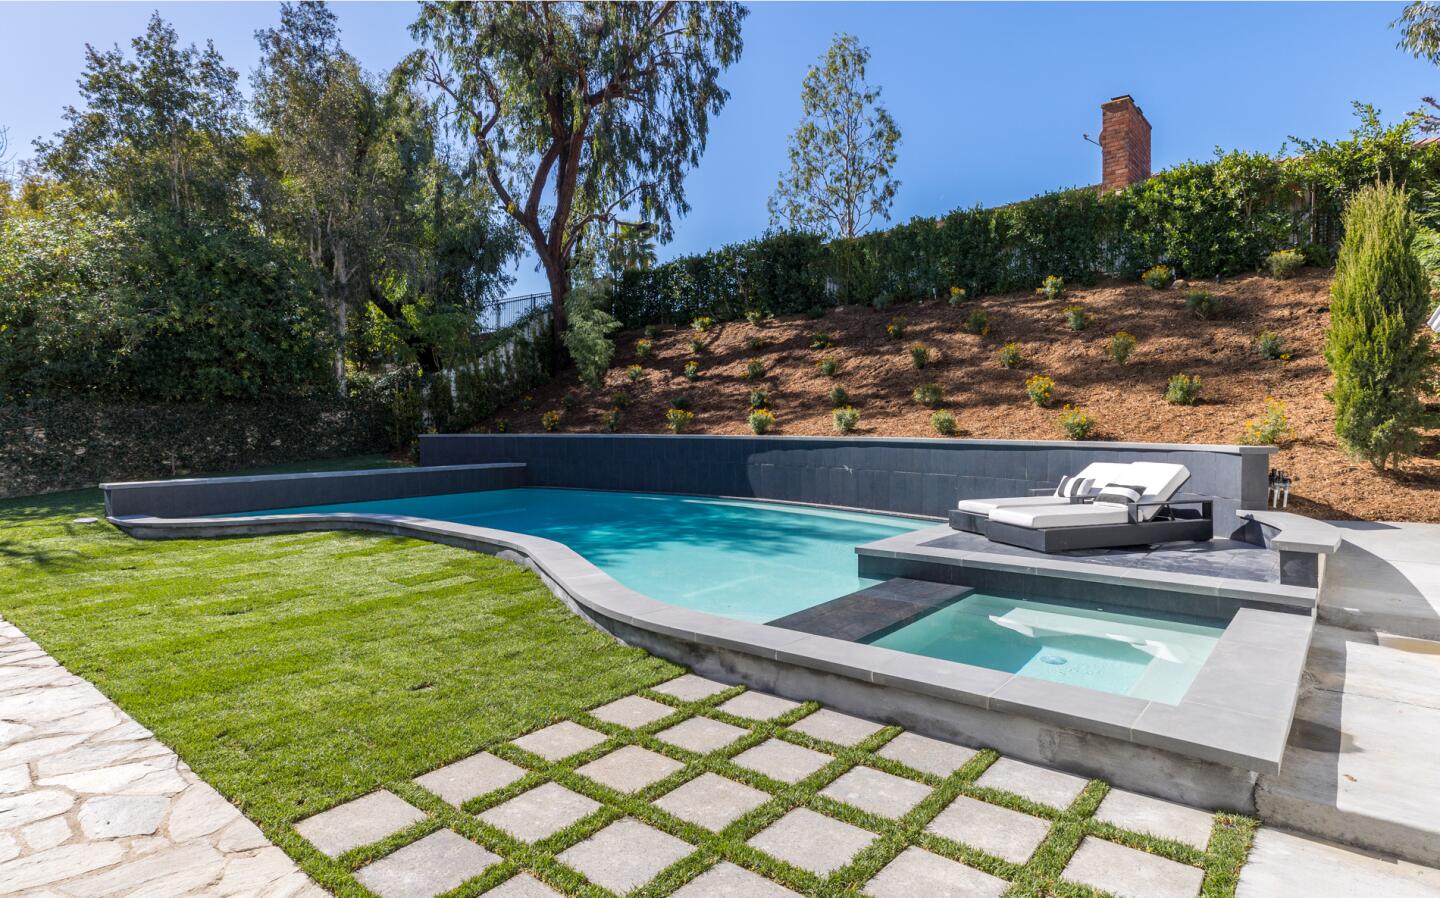 A backyard pool and spa.